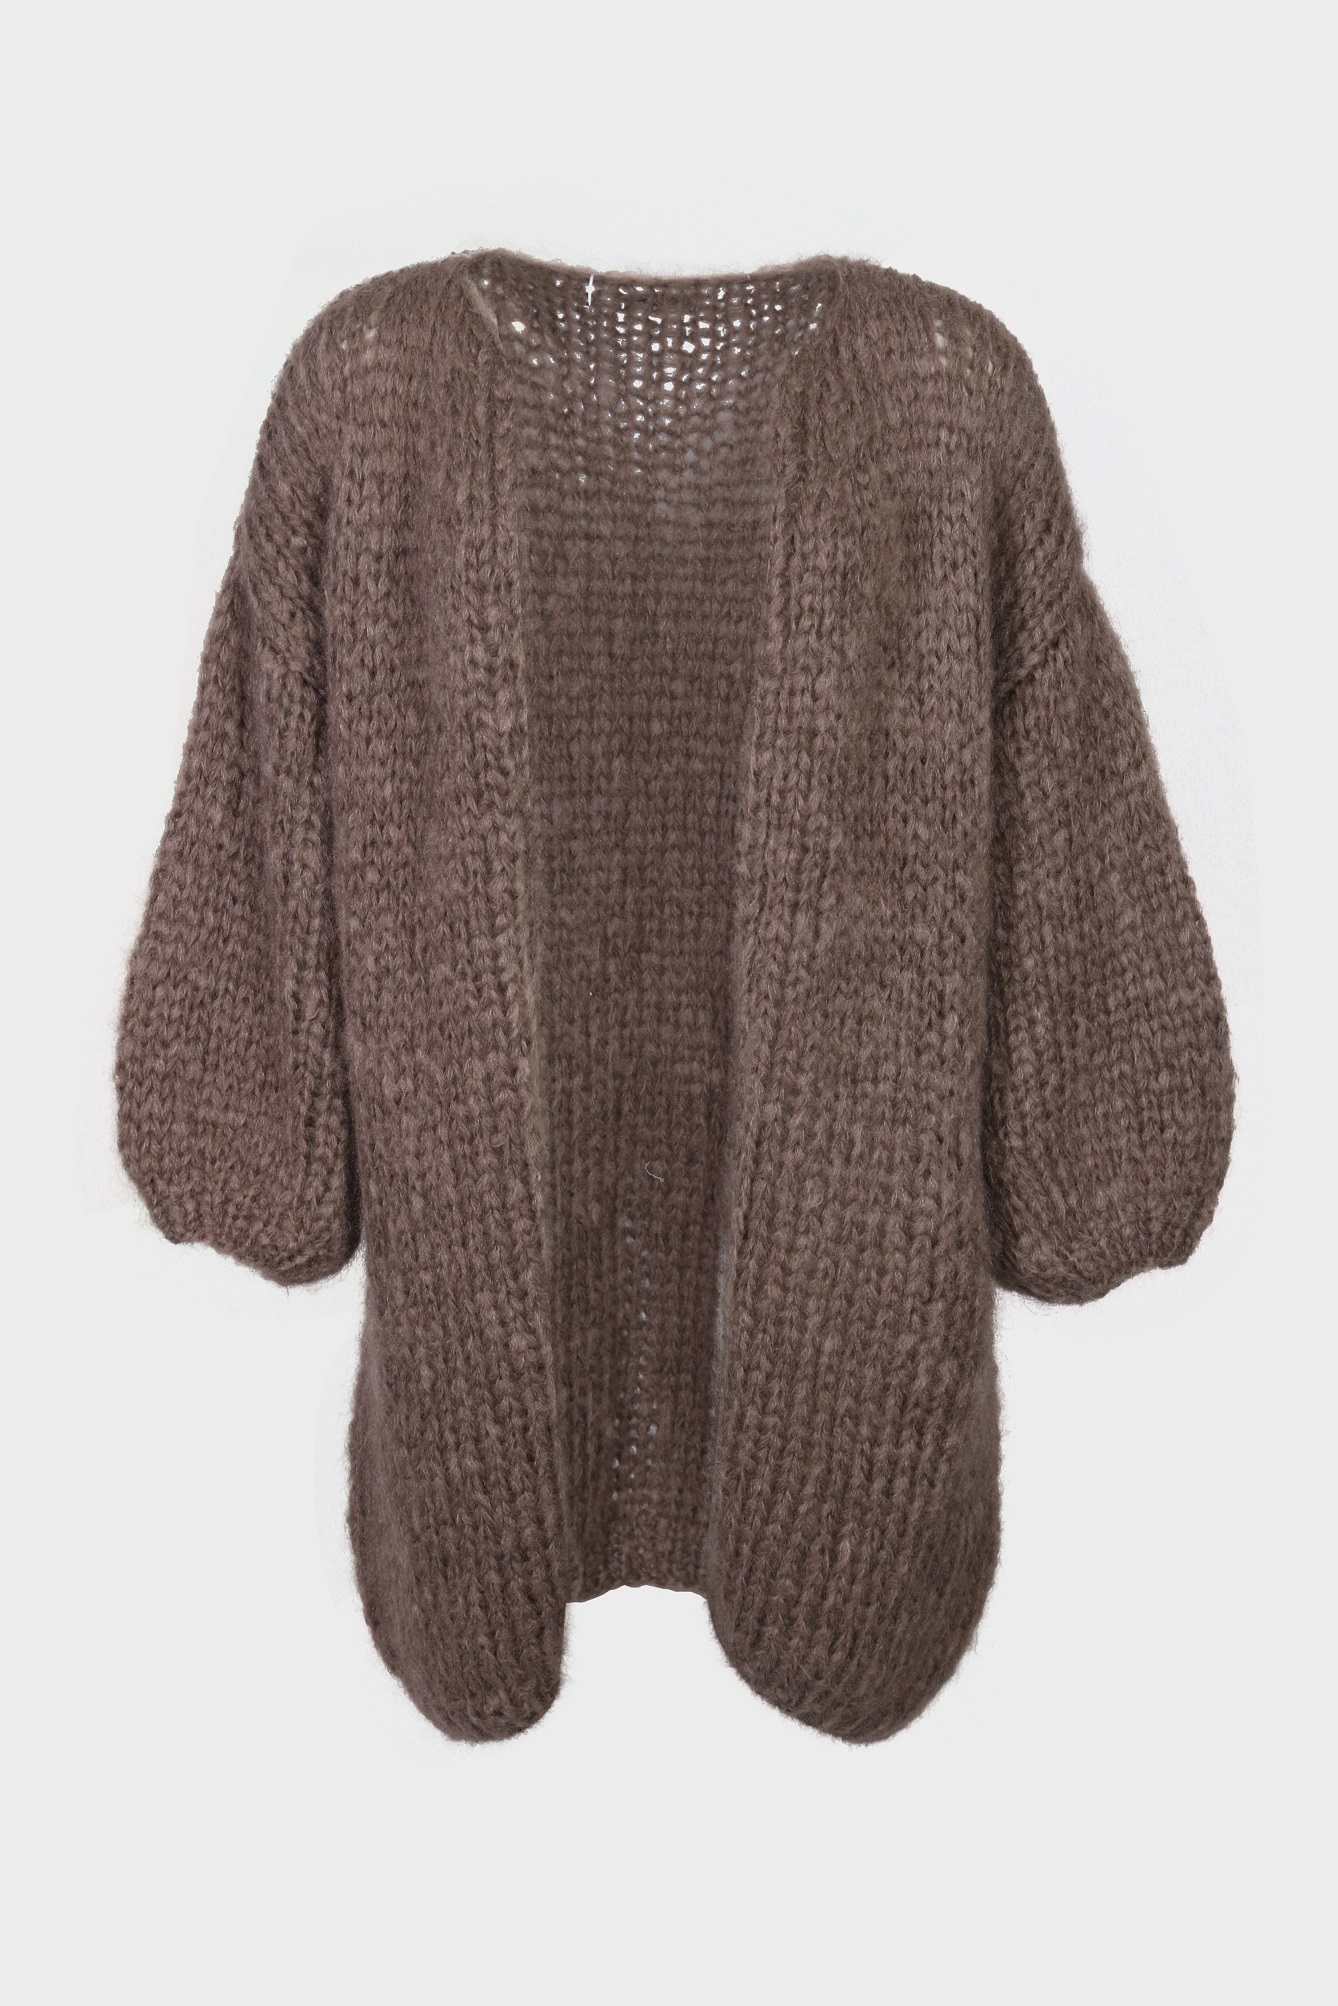 MAIAMI Short Knit Coat in Brown